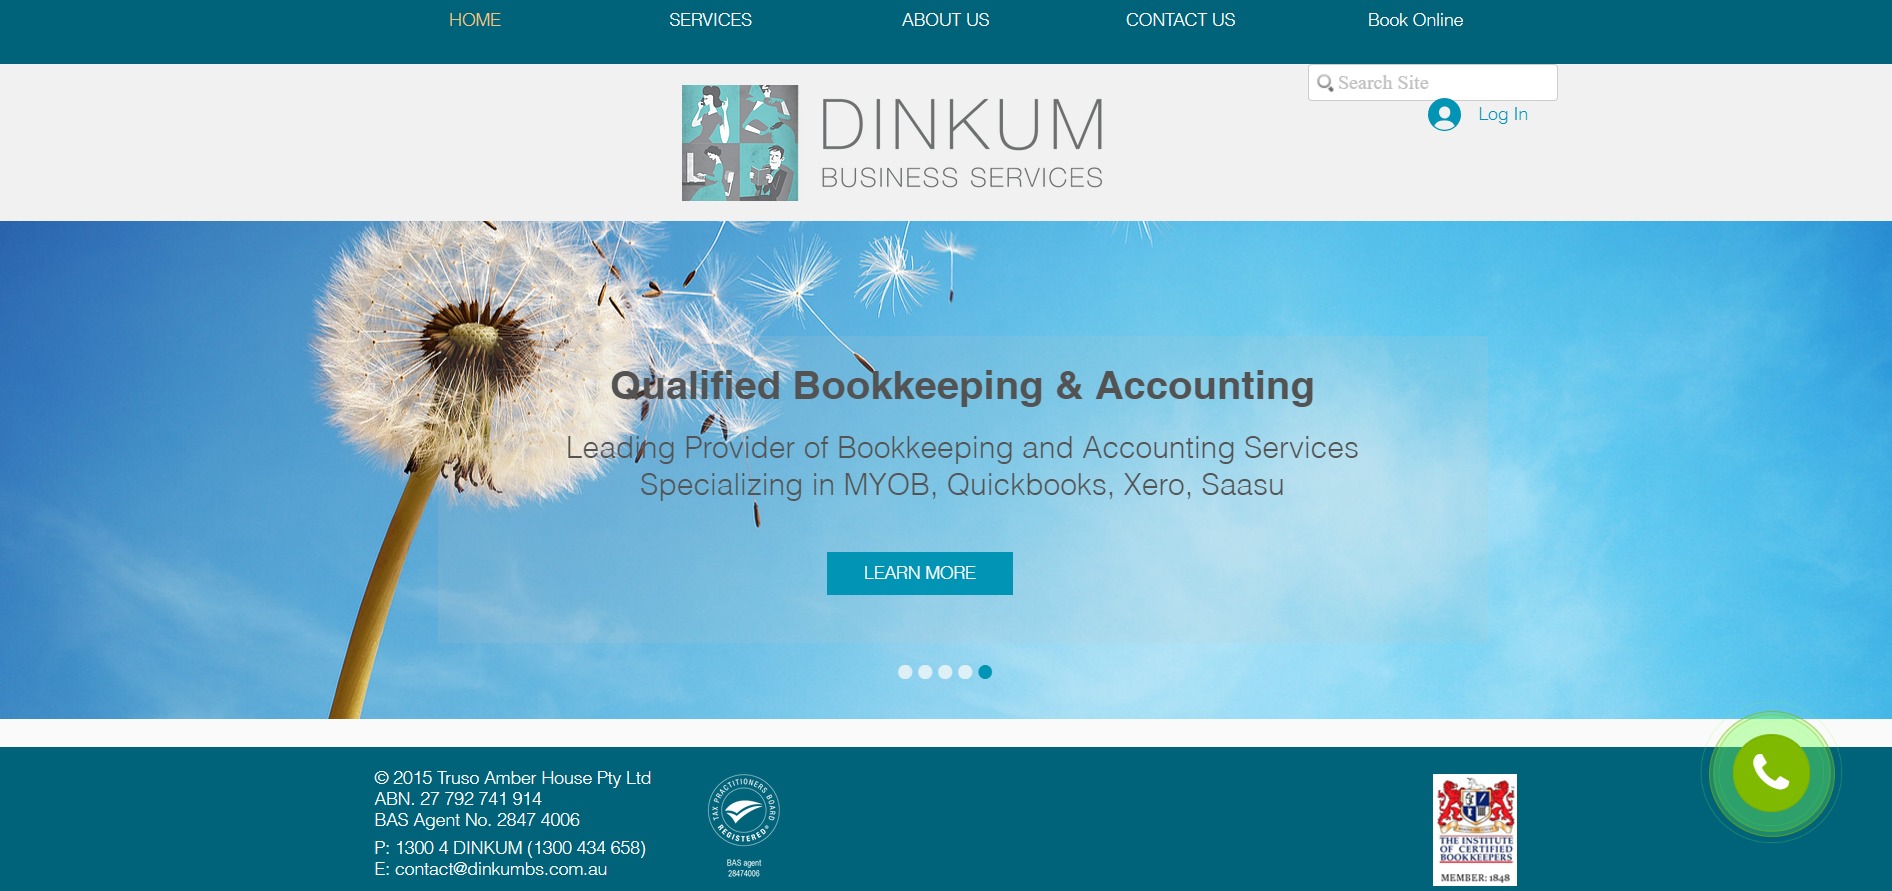 Dinkum Business Services